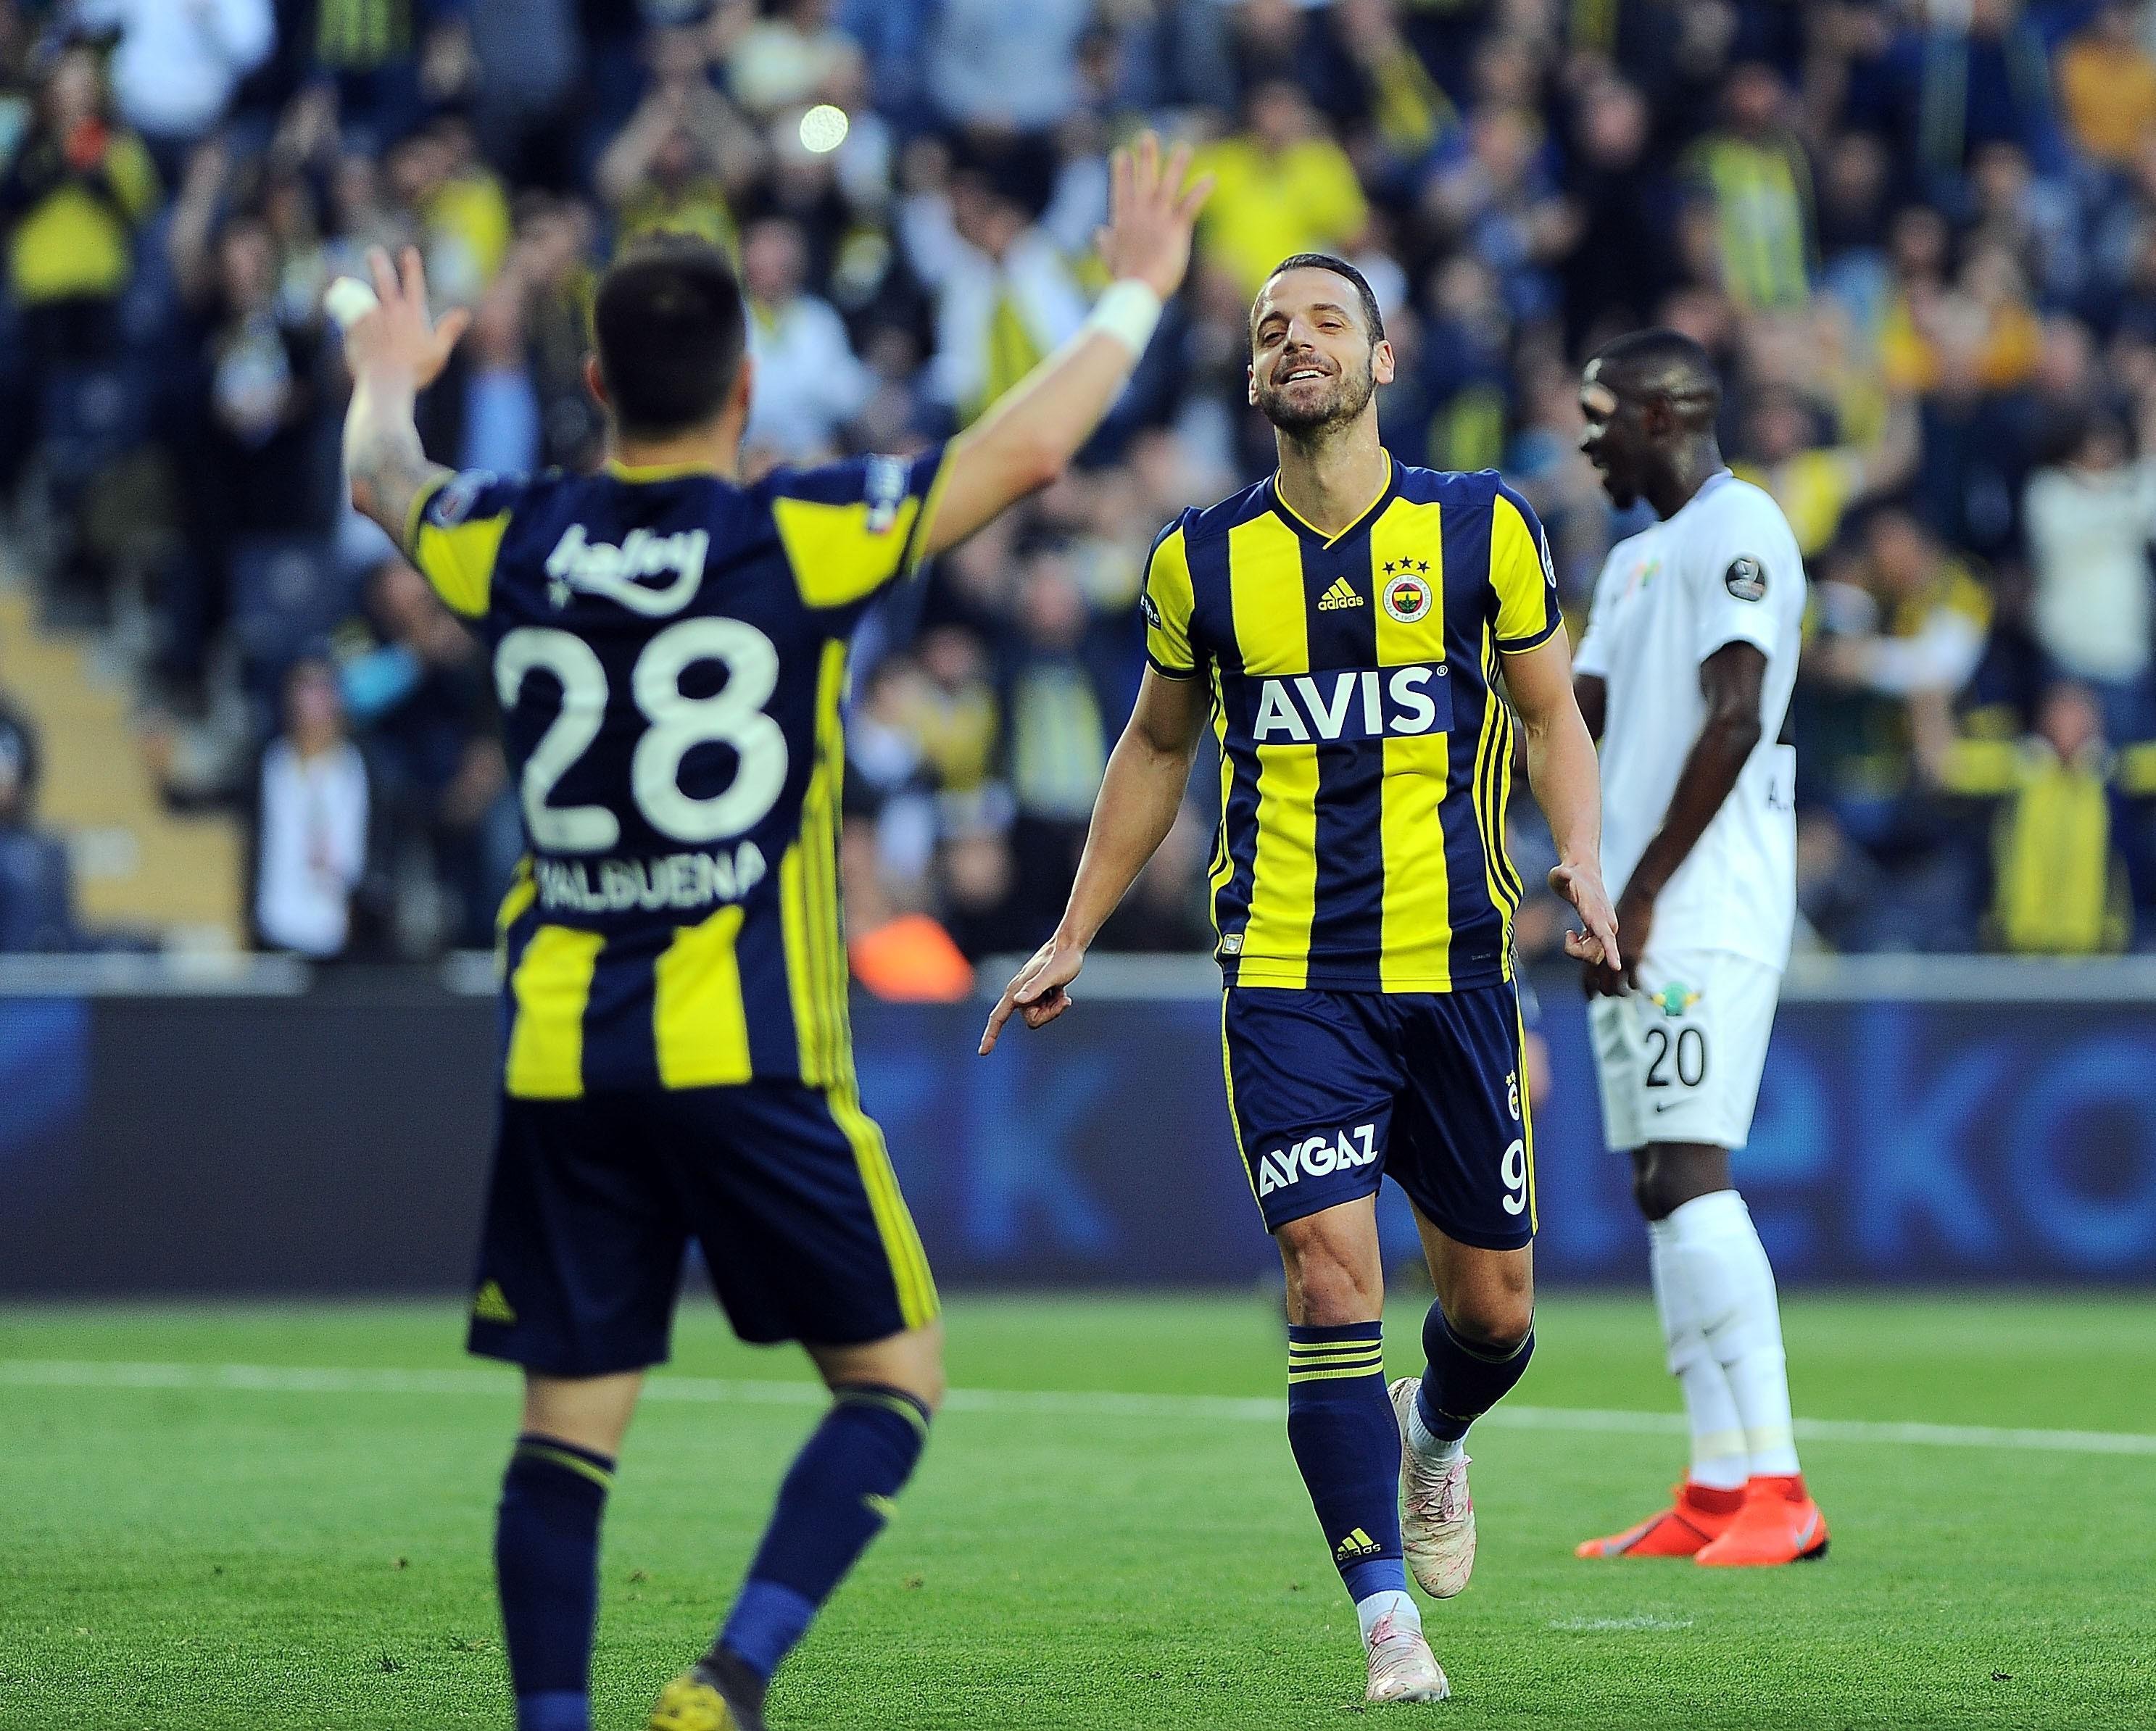 Fenerbahçe Akhisarsporu evinde yendi